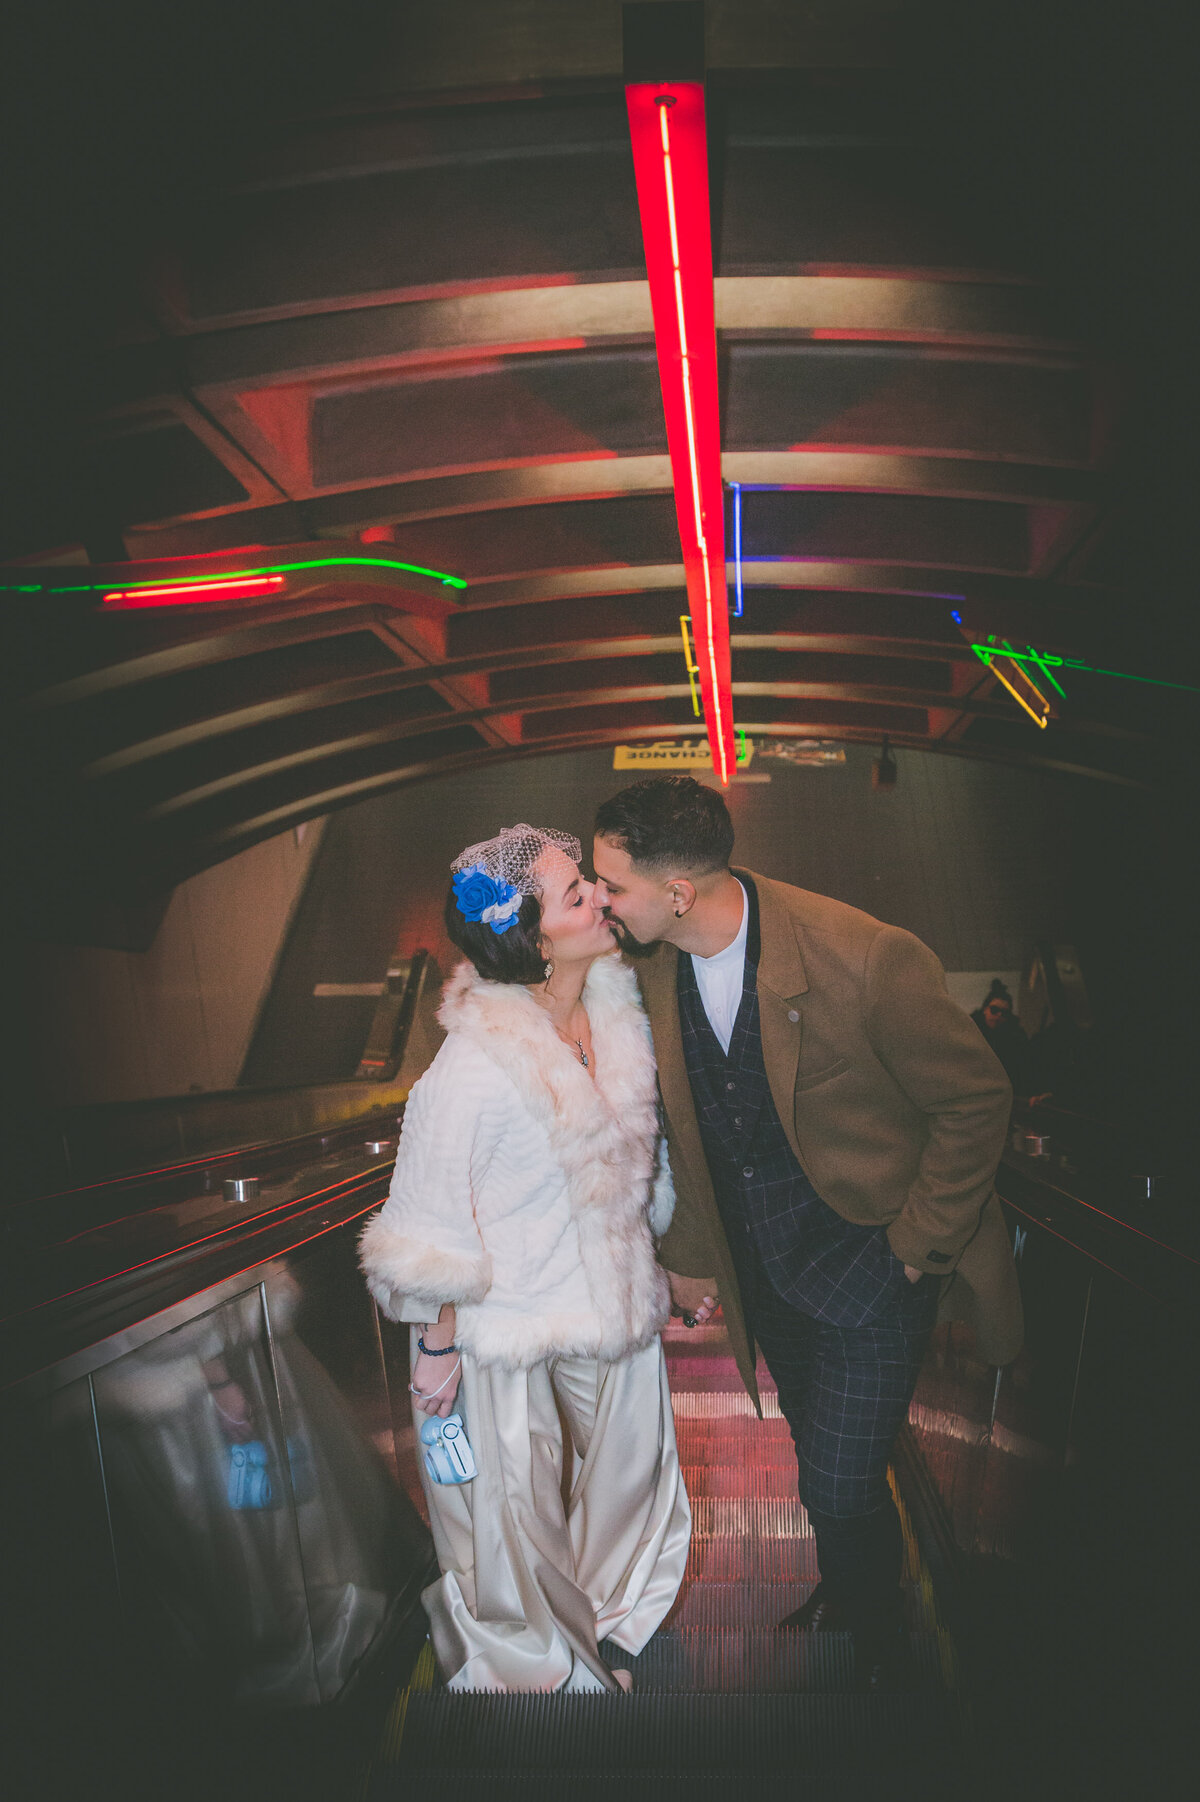 Couple kisses on escalator with cool lighting.